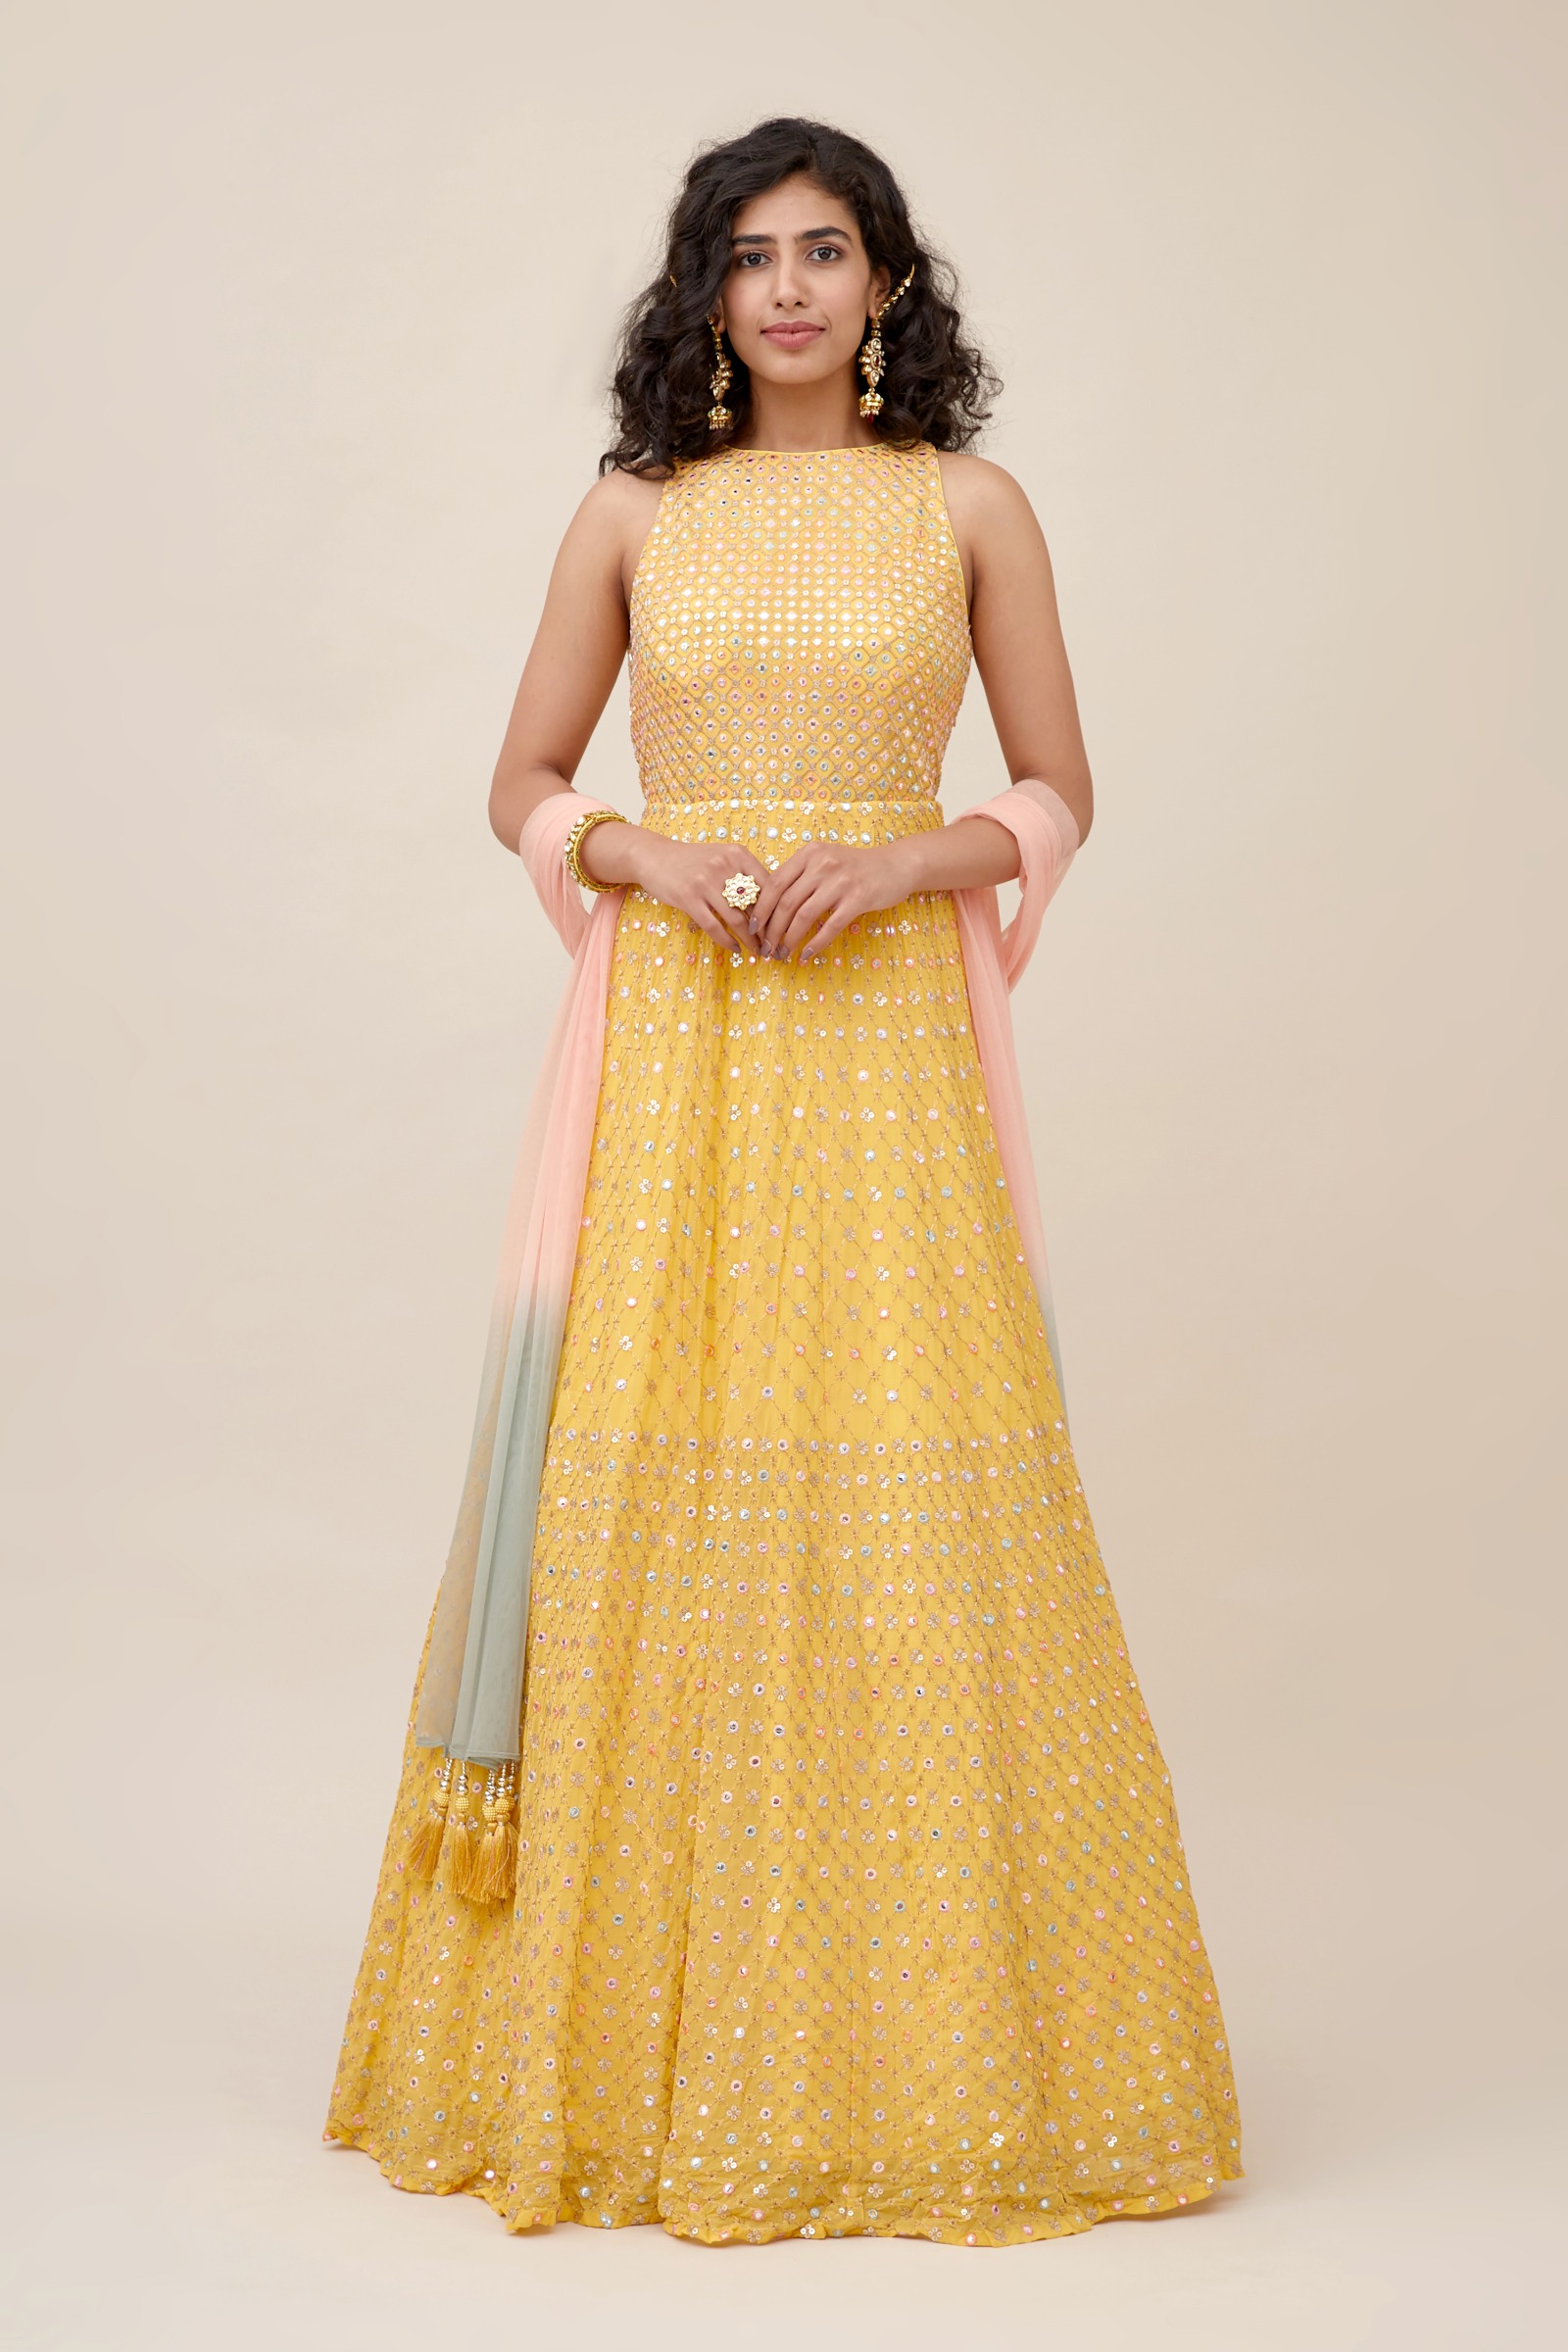 Buy Yellow Anarkali Suit For Haldi Function | Appelle Fashion